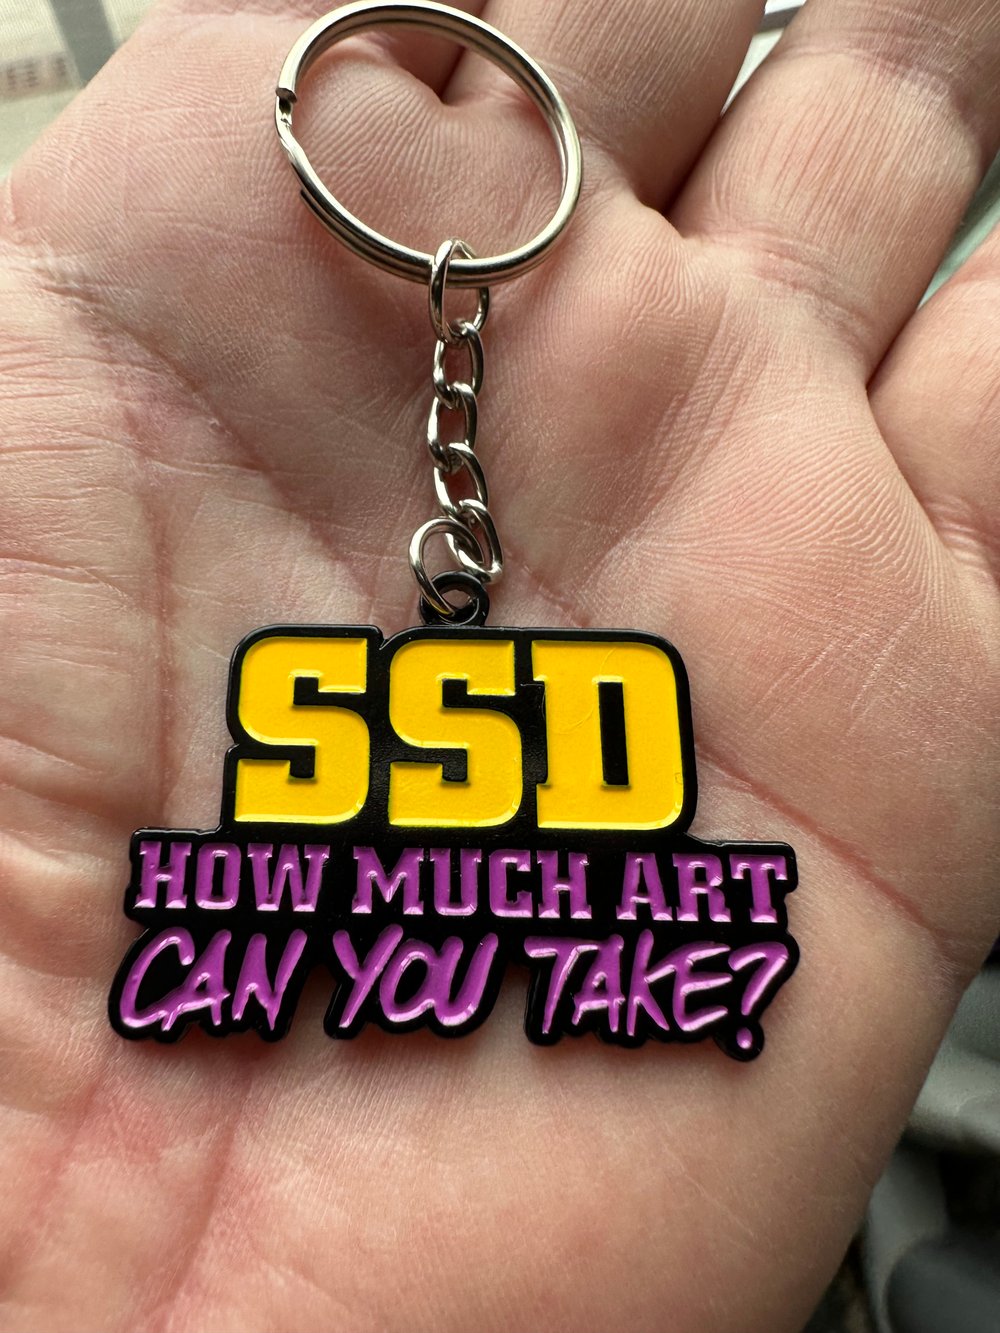 SSD “How Much Art” soft metal keychain 